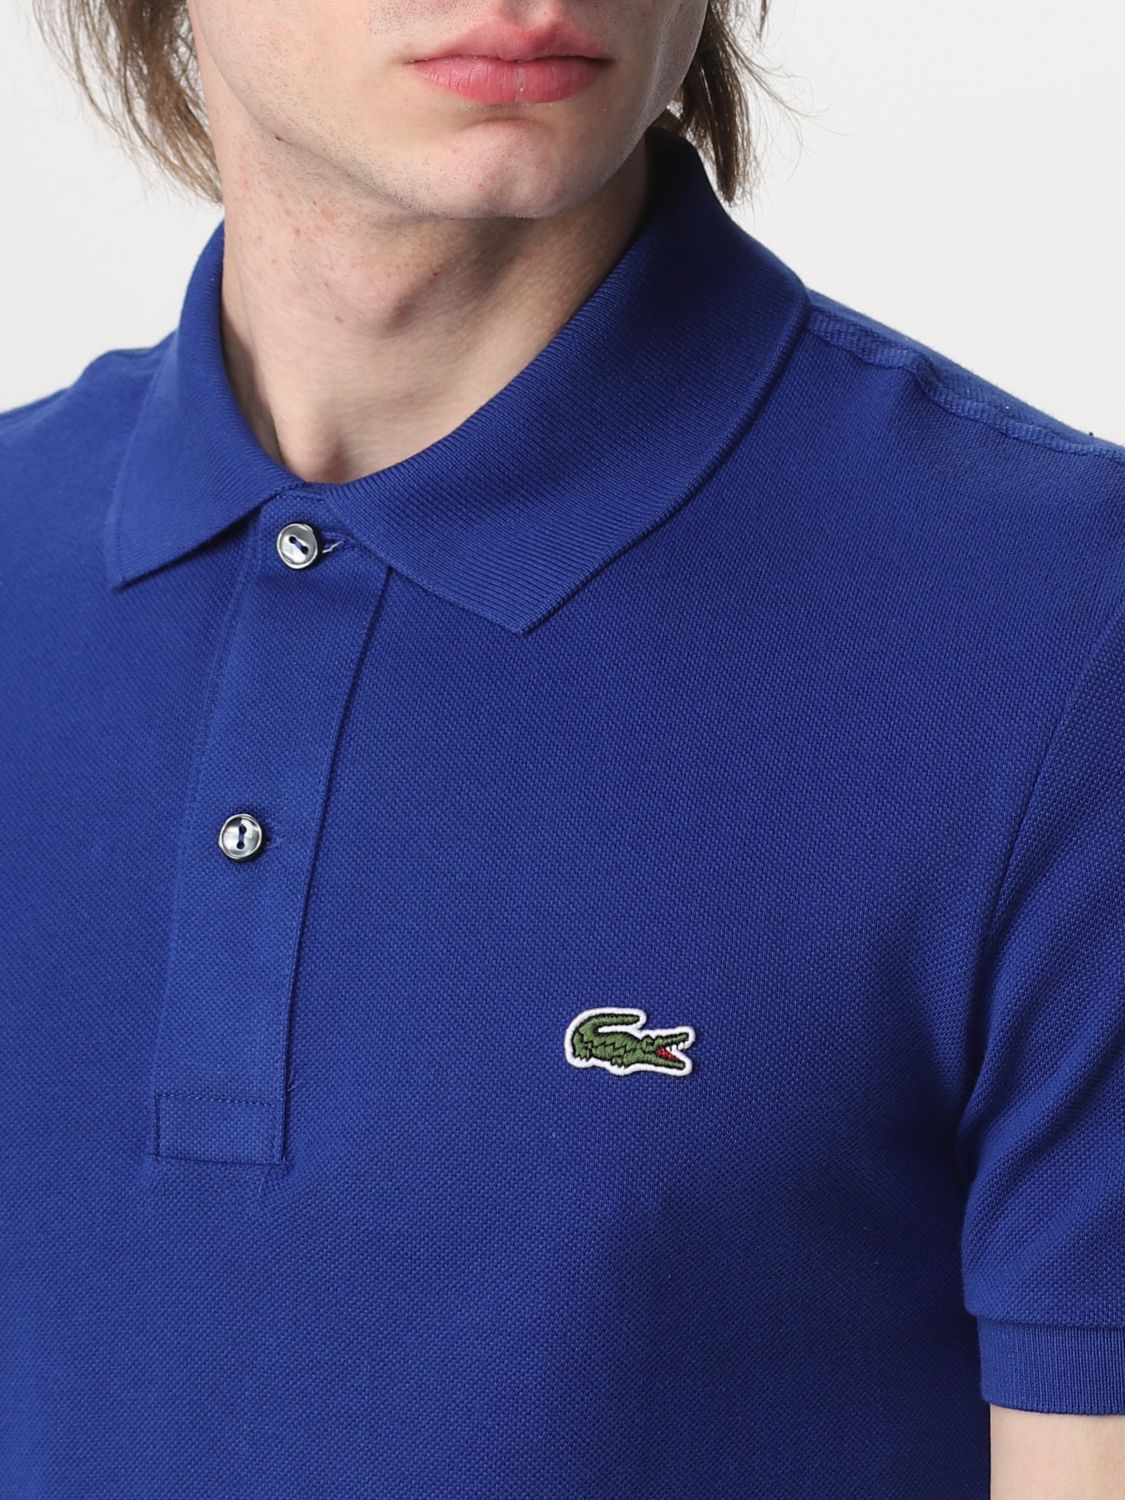 LACOSTE: basic polo shirt with logo - Blue | Lacoste polo shirt PH4012 ...